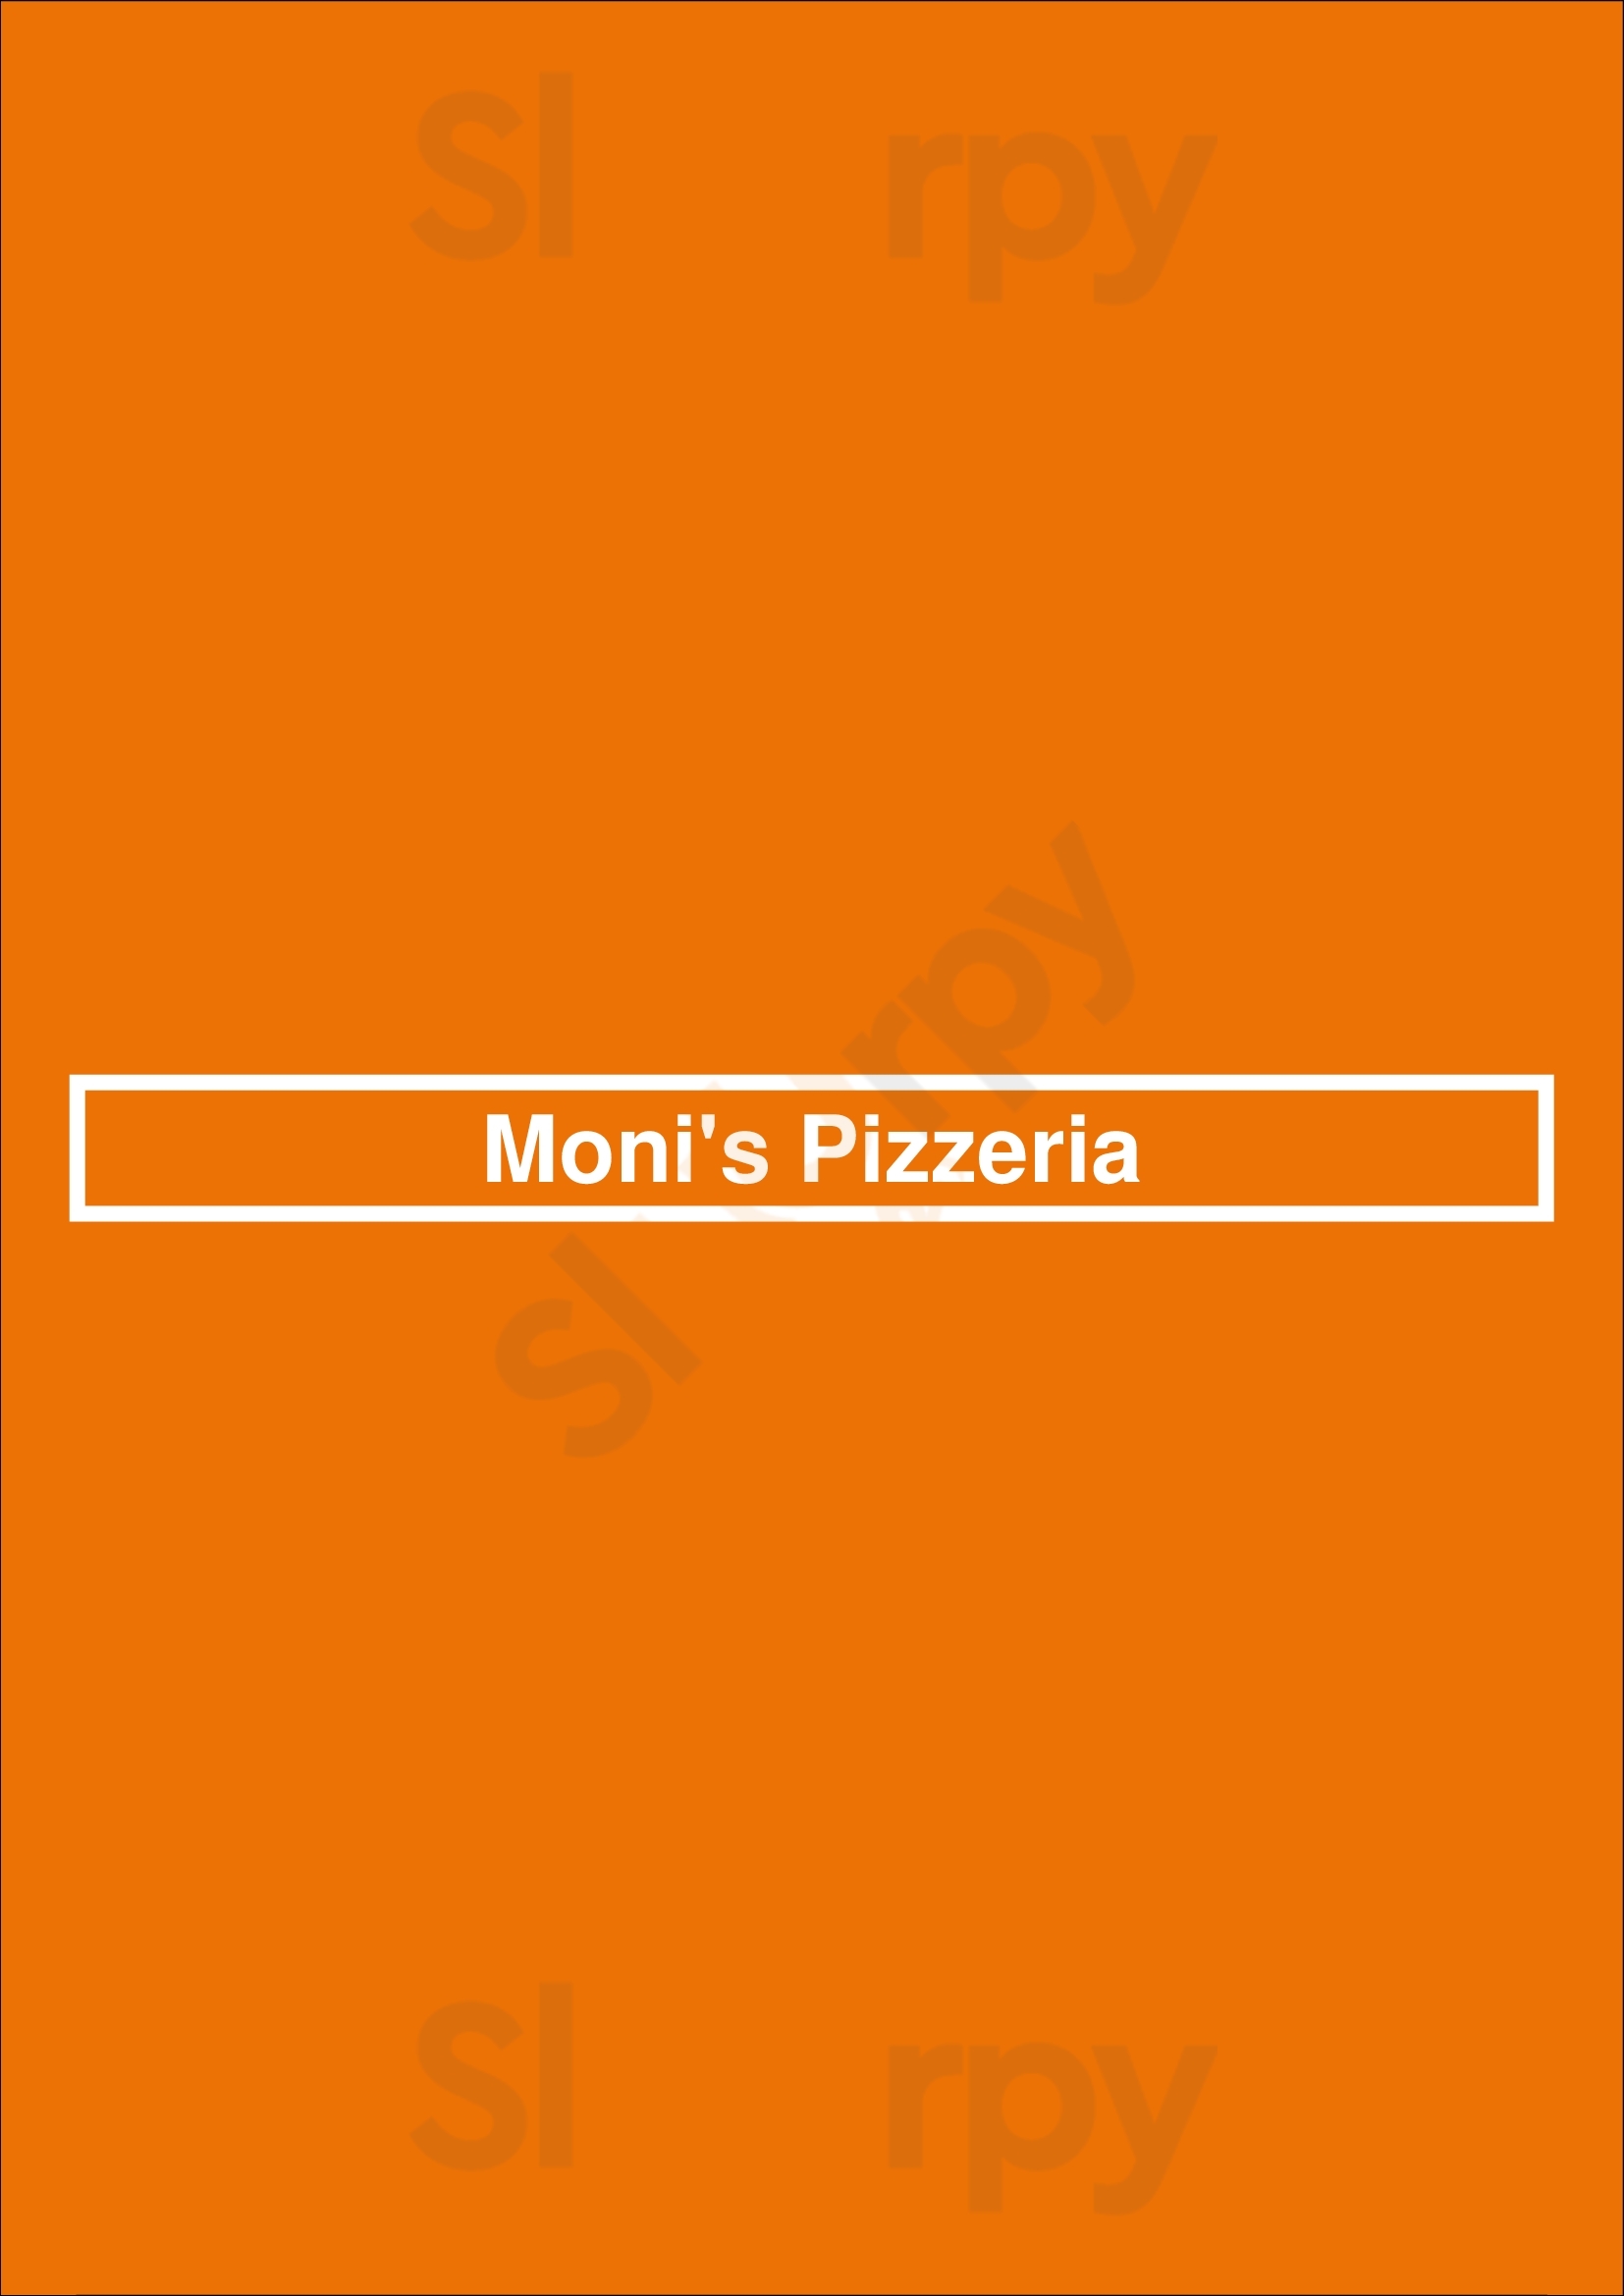 Moni's Pizzeria Peñíscola Menu - 1